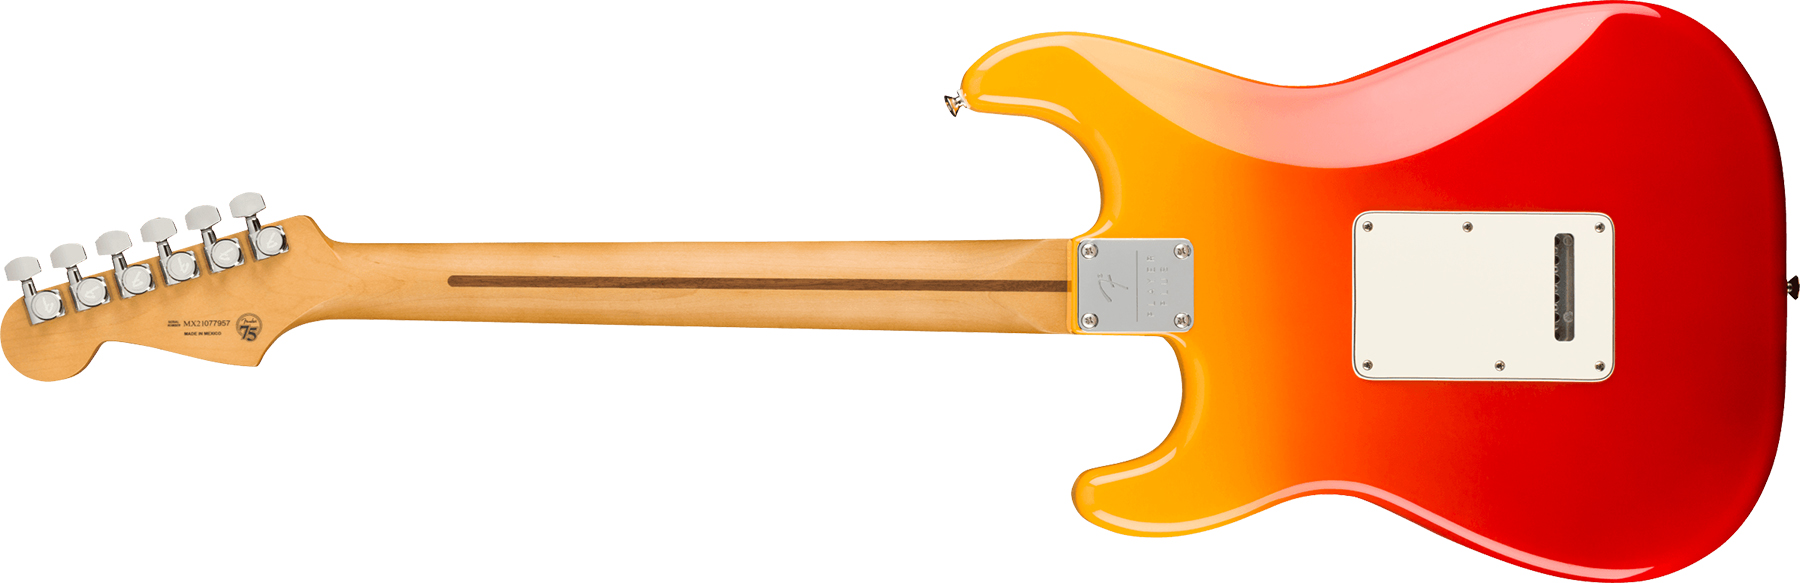 Fender Strat Player Plus Mex 3s Trem Mn - Tequila Sunrise - E-Gitarre in Str-Form - Variation 1